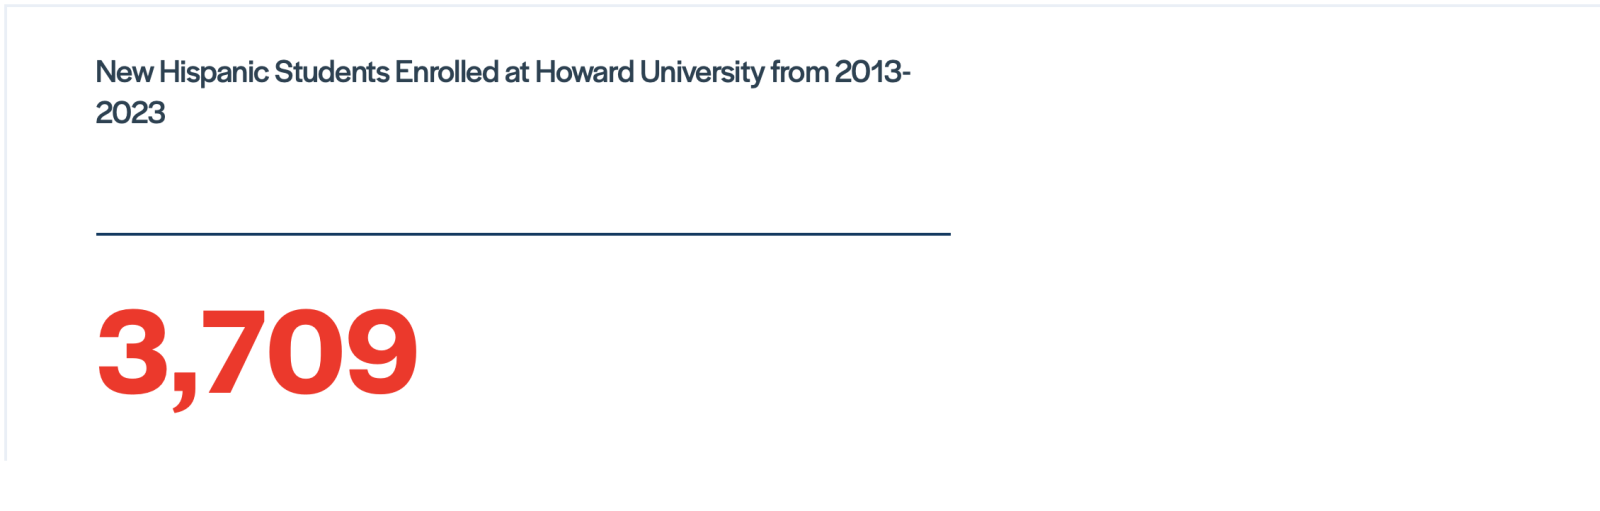 Howard University's Hispanic Student Demographics during the 2013 - 2023 academic years.